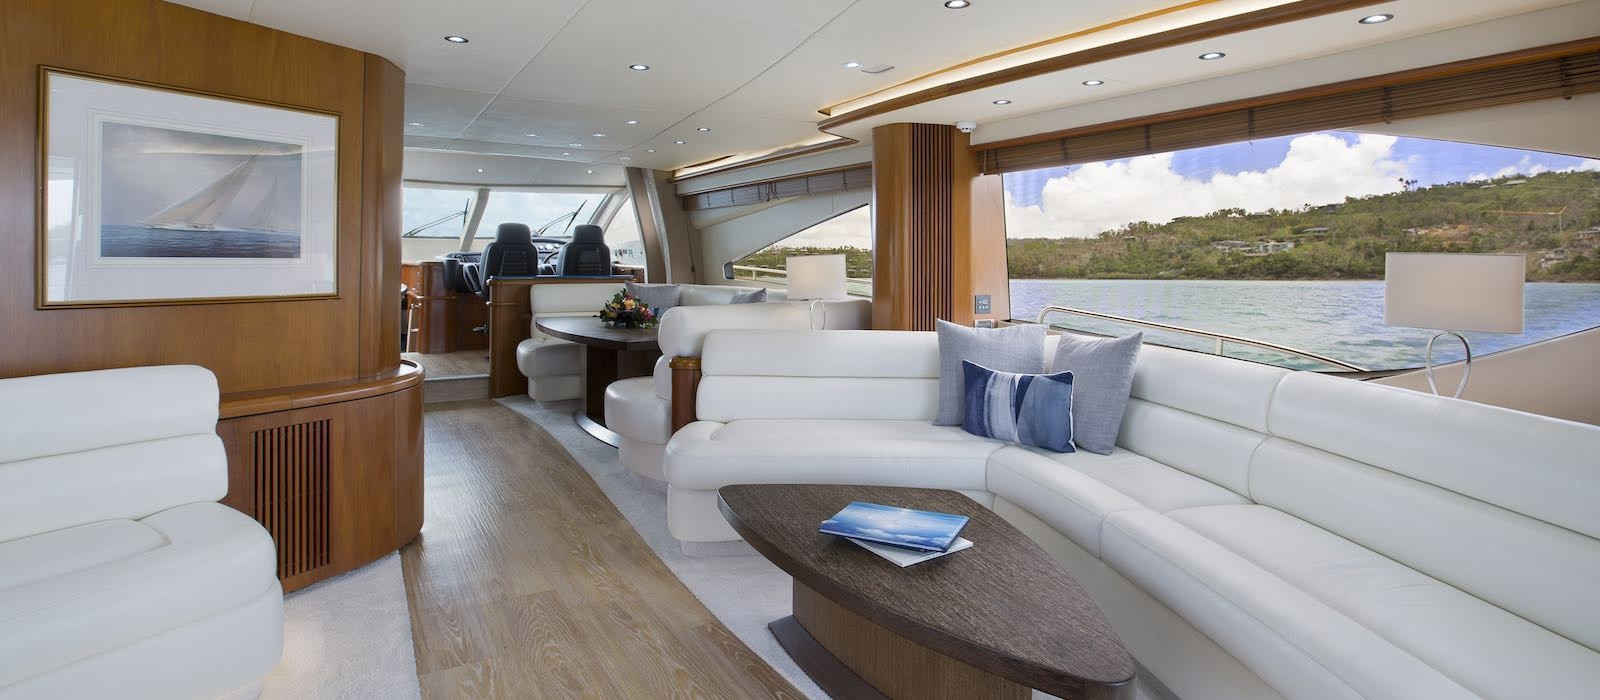 Spacious lounge on Alani luxury boat hire